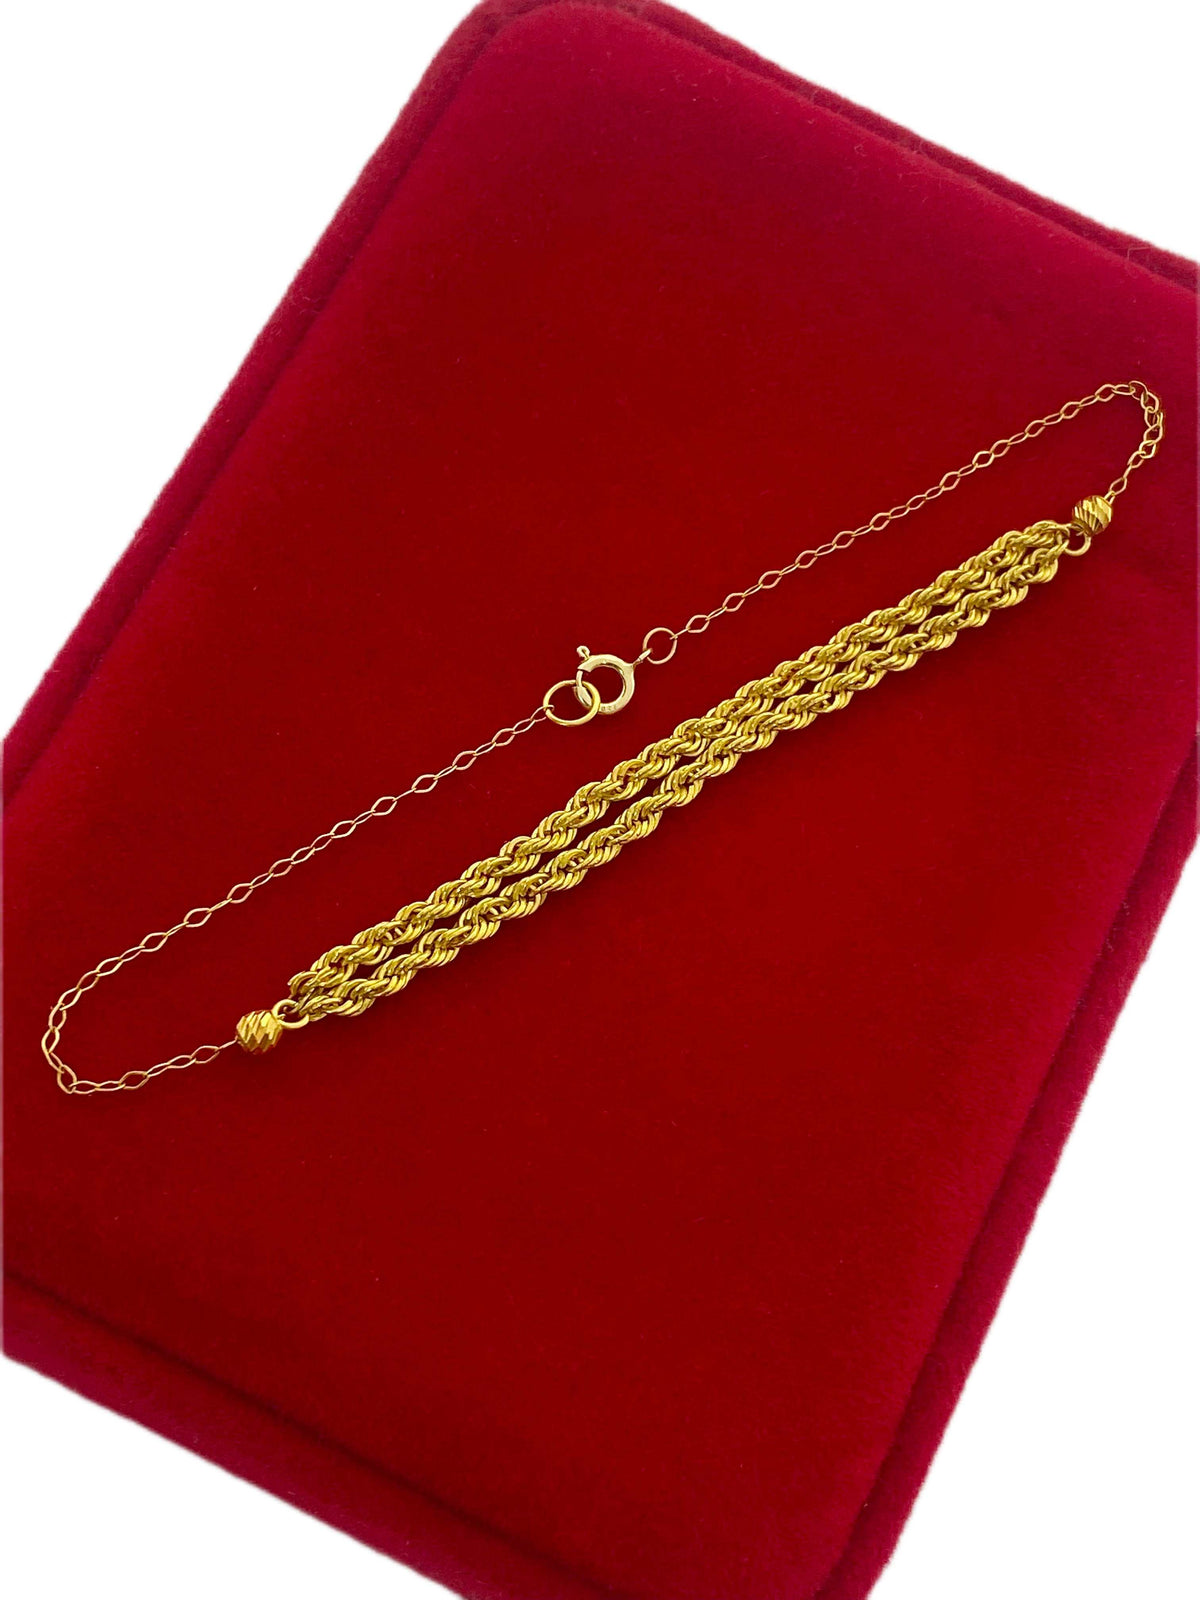 18K Real Gold Double Layer Rope Bracelet - Embellish Gold